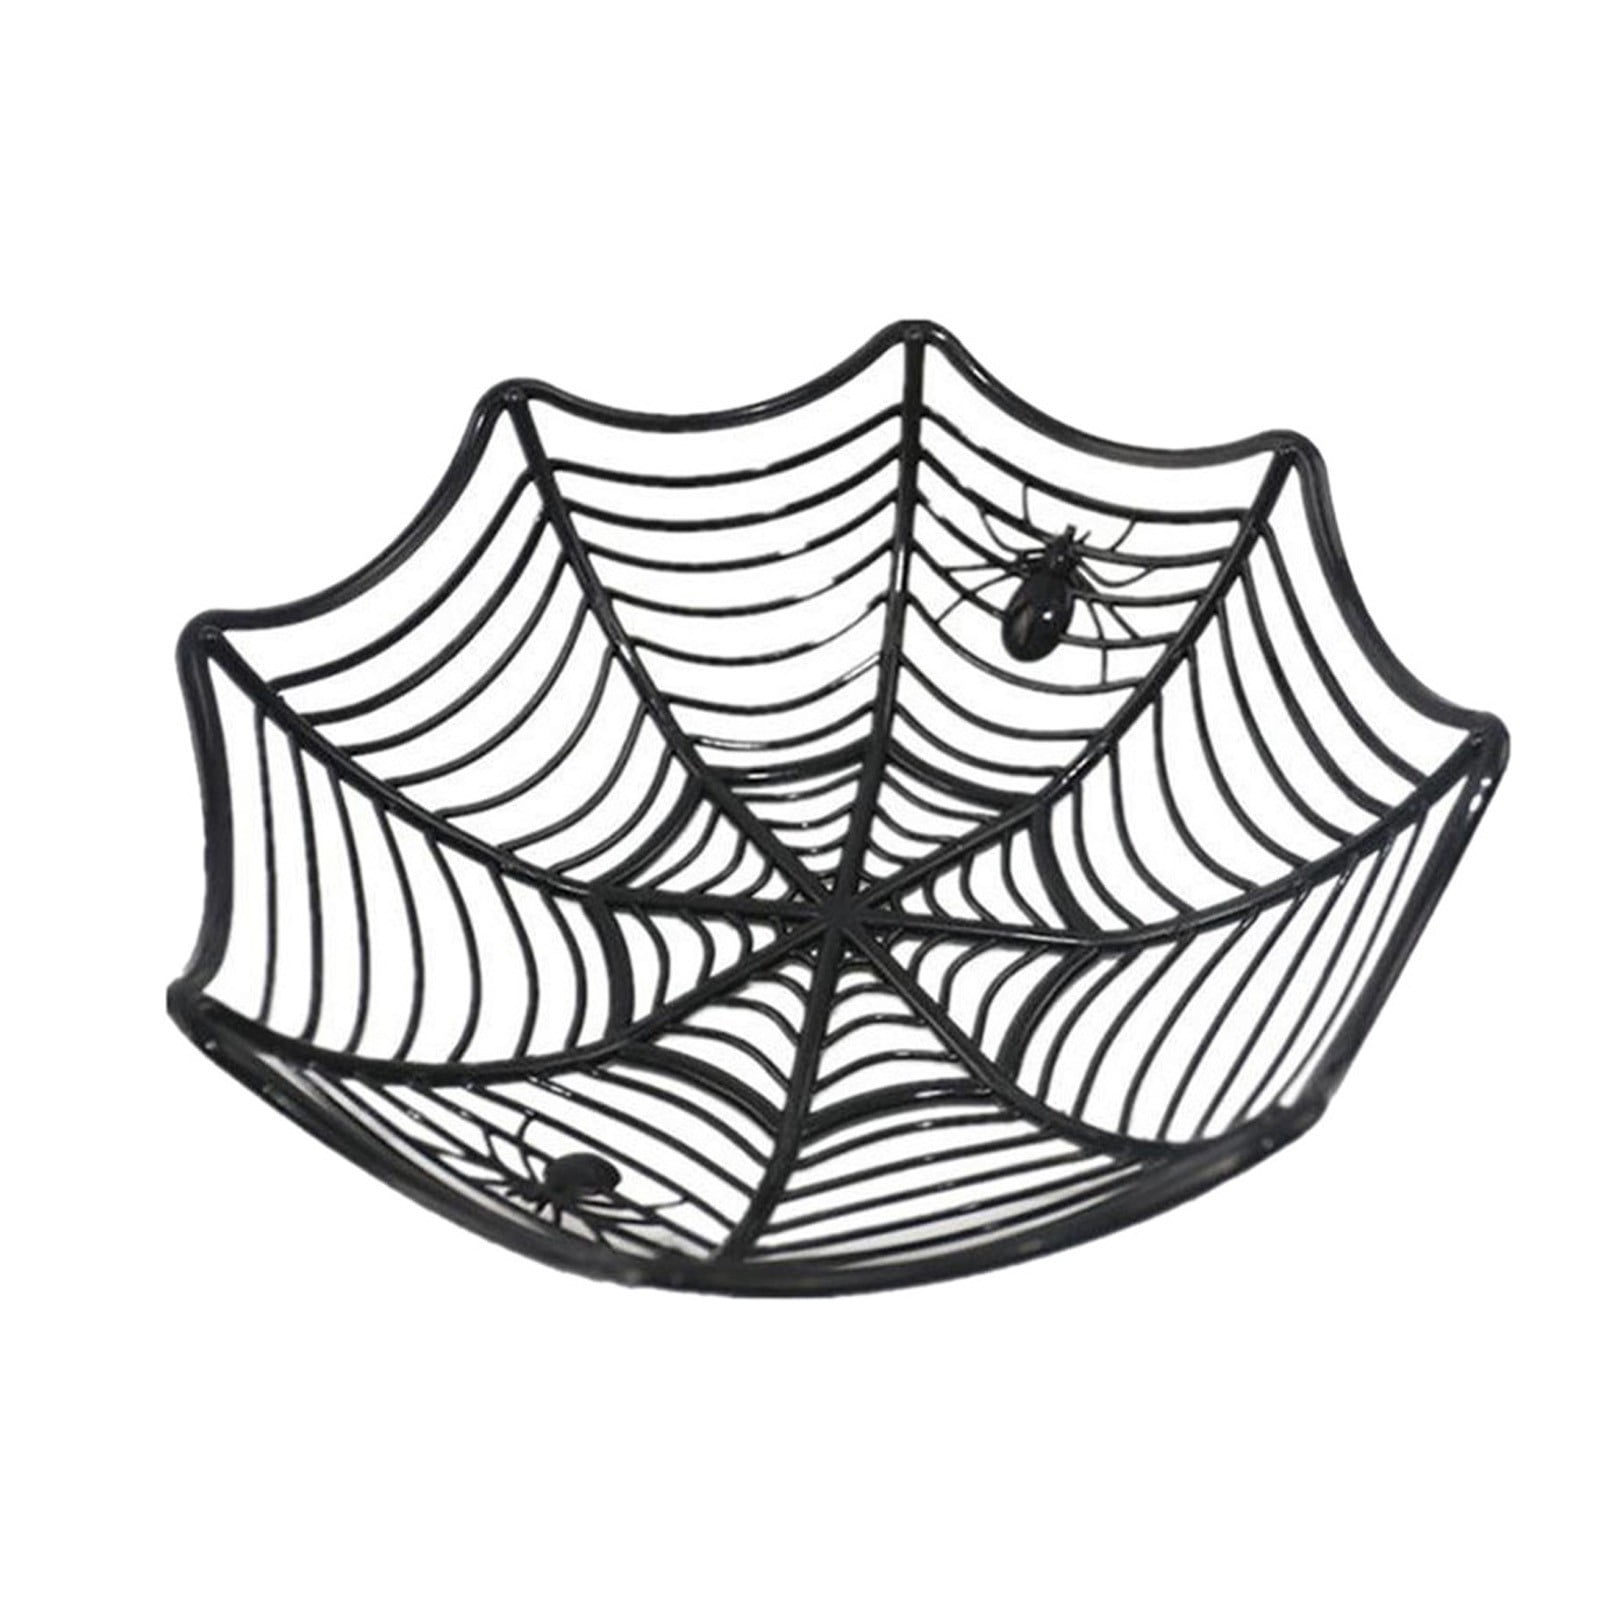 Details about   Halloween Ceramic Black Spider Web Cobweb Candy Dip Dish Bowl Wine Caddie New 